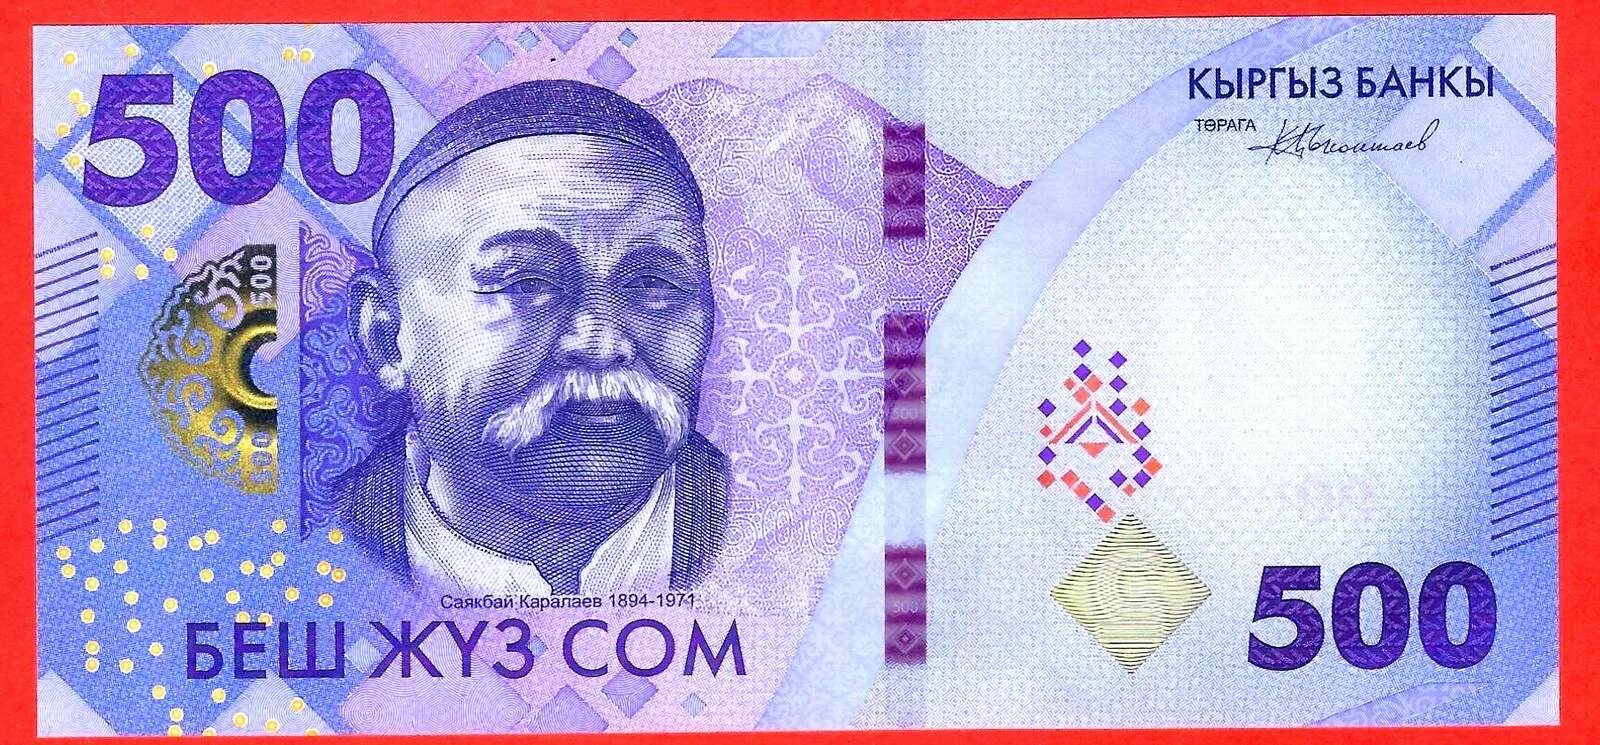 Киргизы 2023. 1000 Сомов Киргизии 2023. 200 Сом Киргизия 2023. Банкнота Киргизии 1000 сом 2023. Кыргызкий 500 сом.